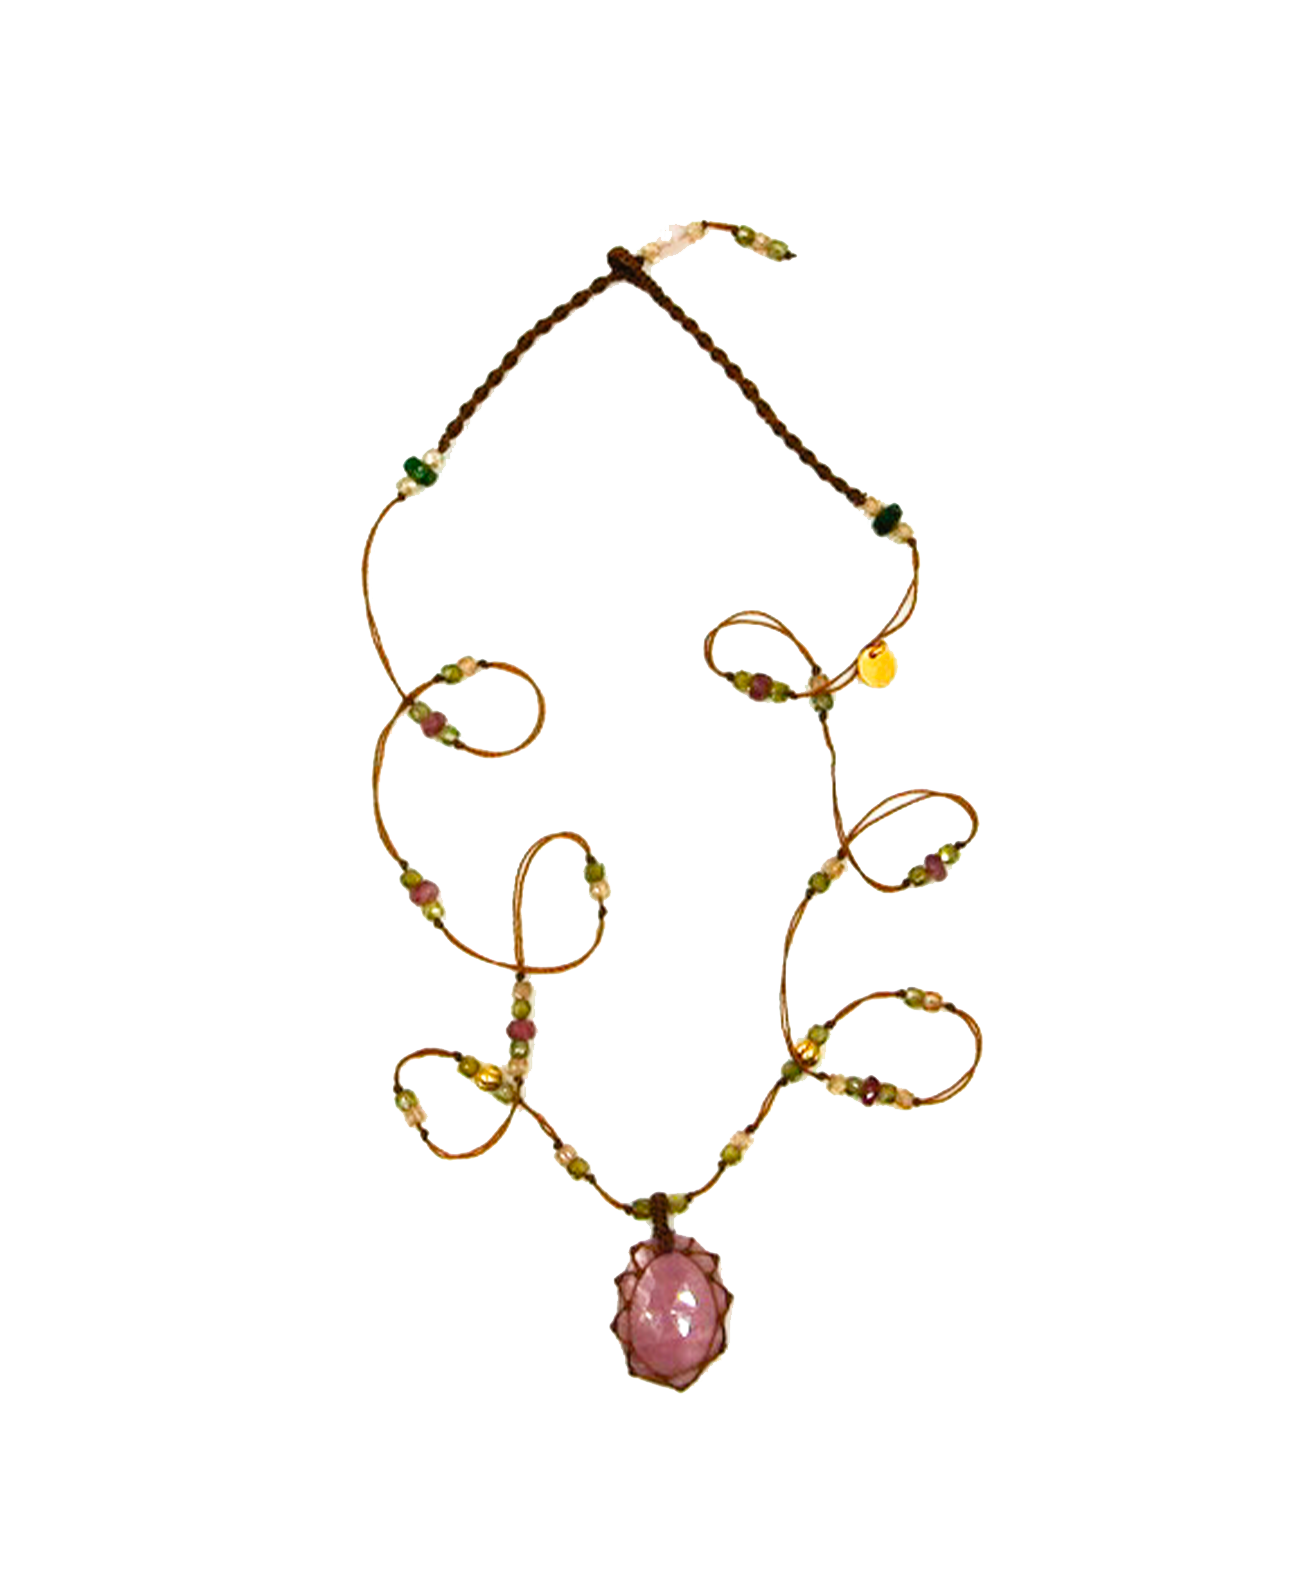 So Precious Short Tibetan Corundum Rose Necklace - Mix Pink Tourmaline - Beige Thread